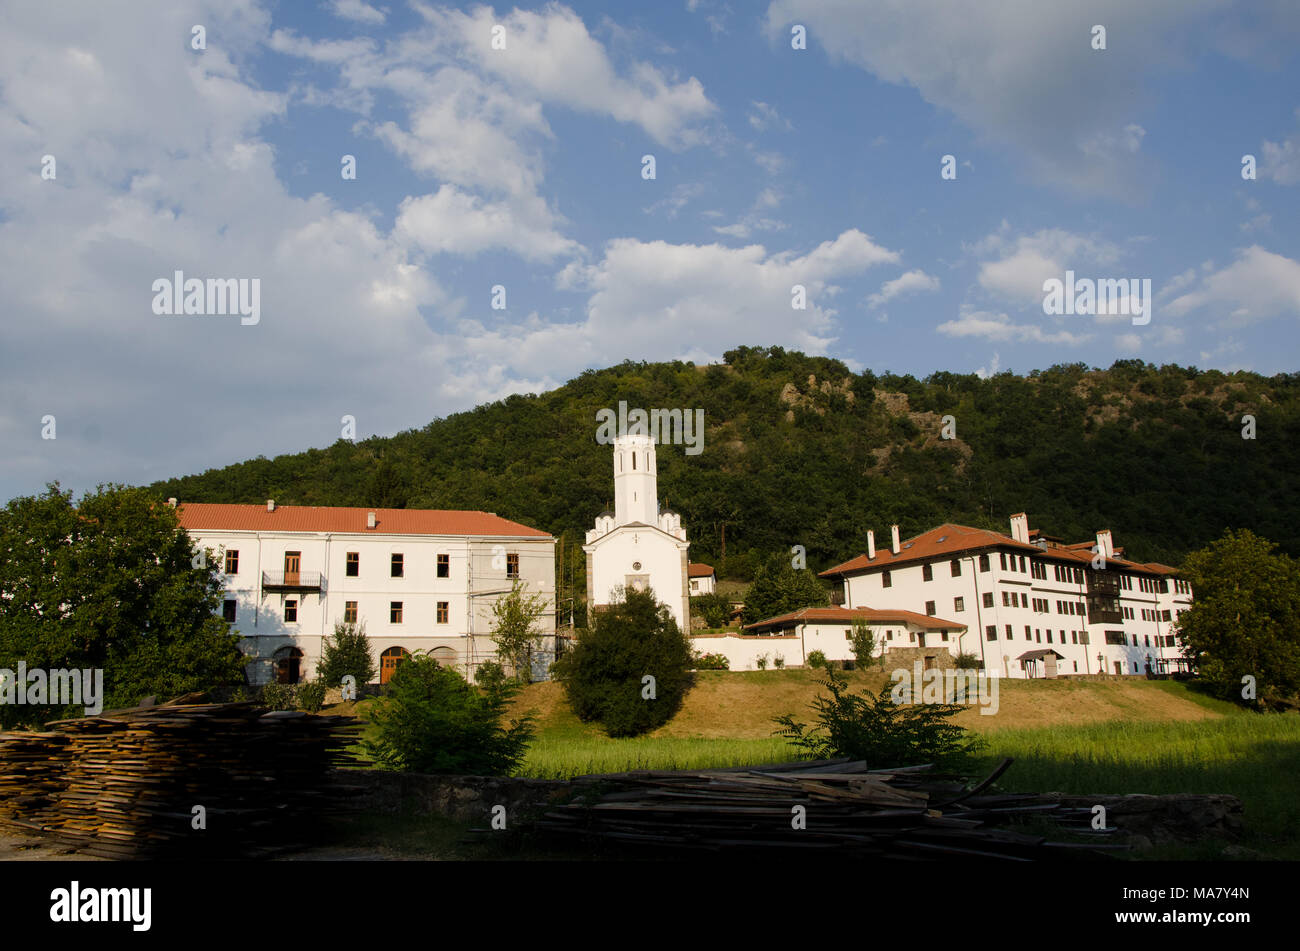 Prohor Pcinjski,Serbia,September 02, 2016: Monastery of Saint Prohor Pcinjski is one of the oldest Serbian Monasteries situated on the border with Rep Stock Photo